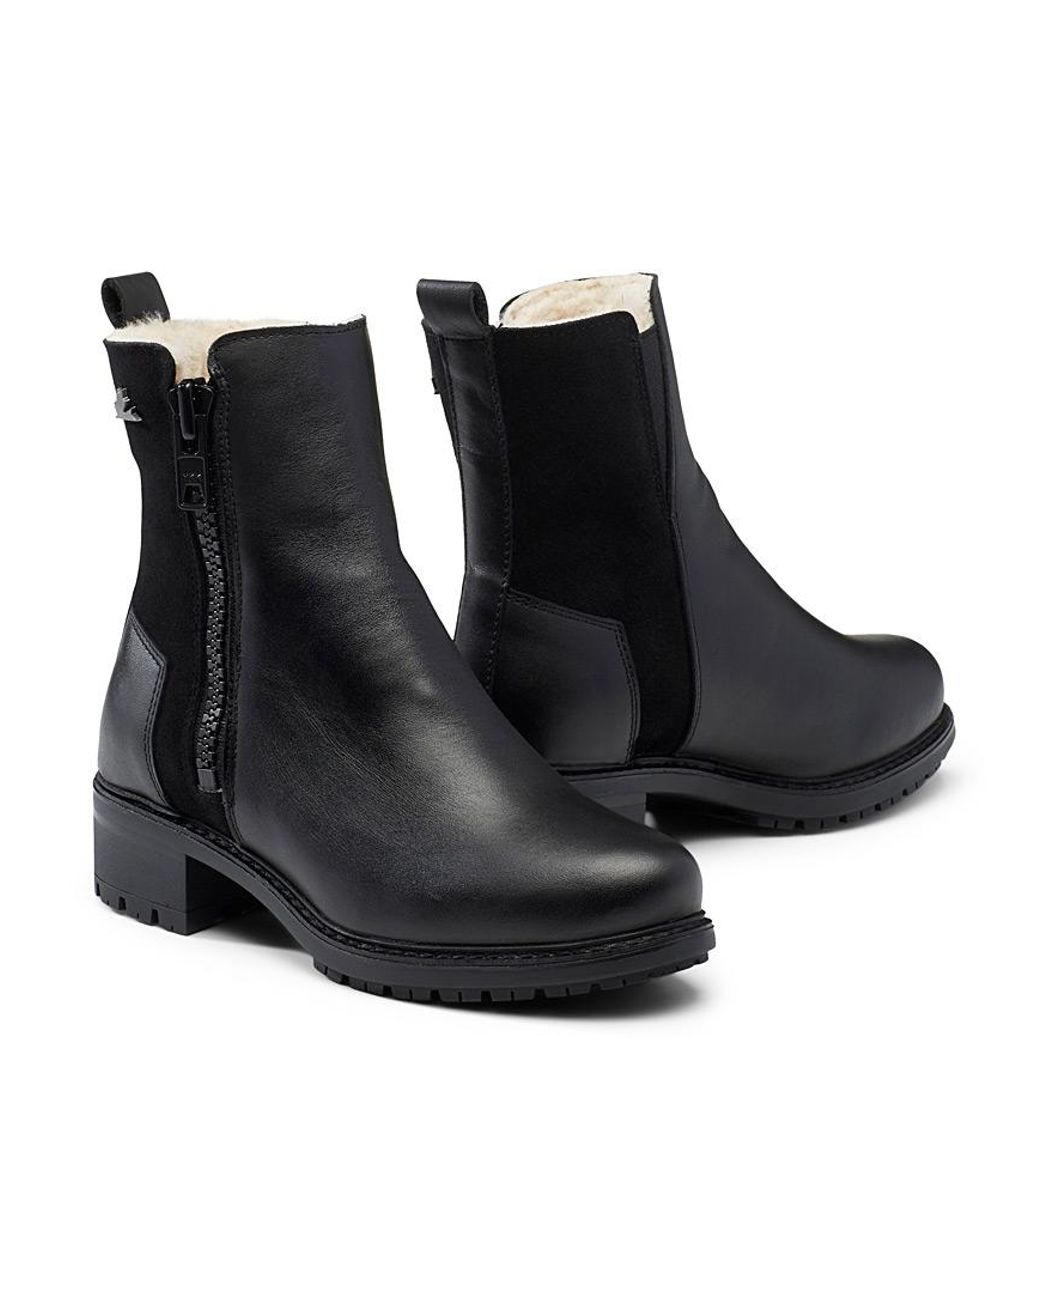 Pajar Faye Chelsea Winter Boots in Black | Lyst Canada